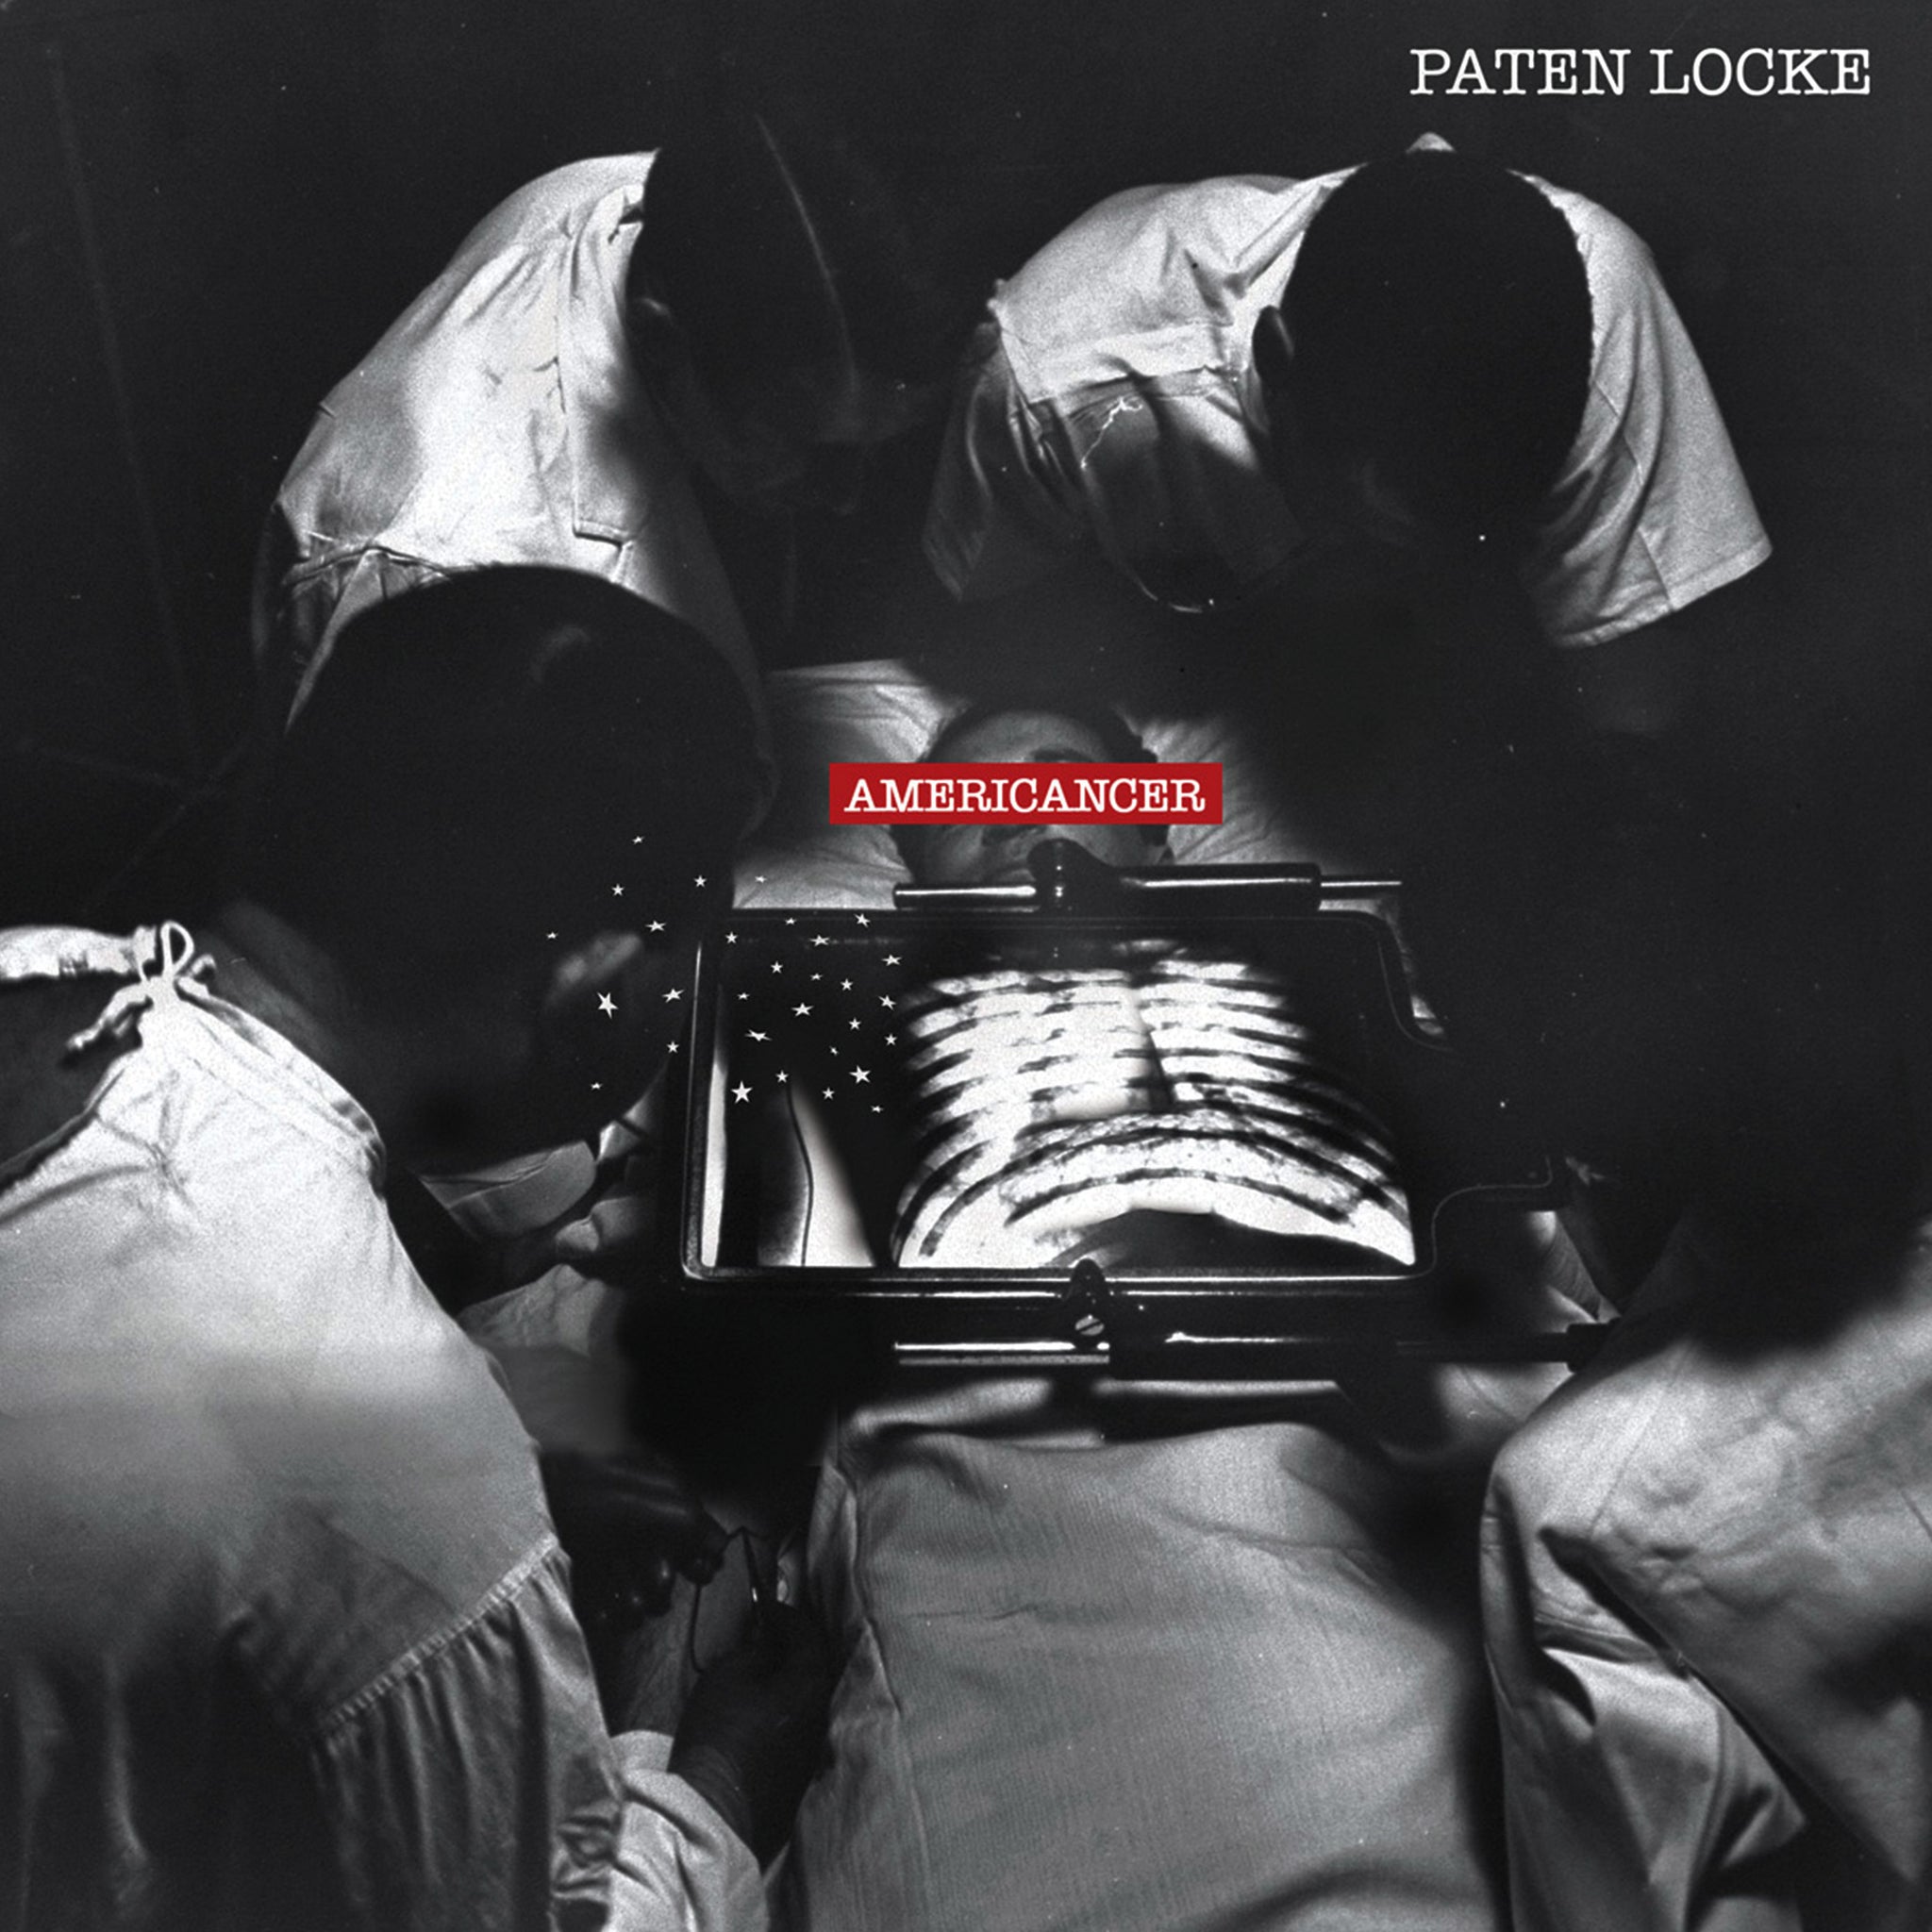 Paten Locke - Americancer (PL004)